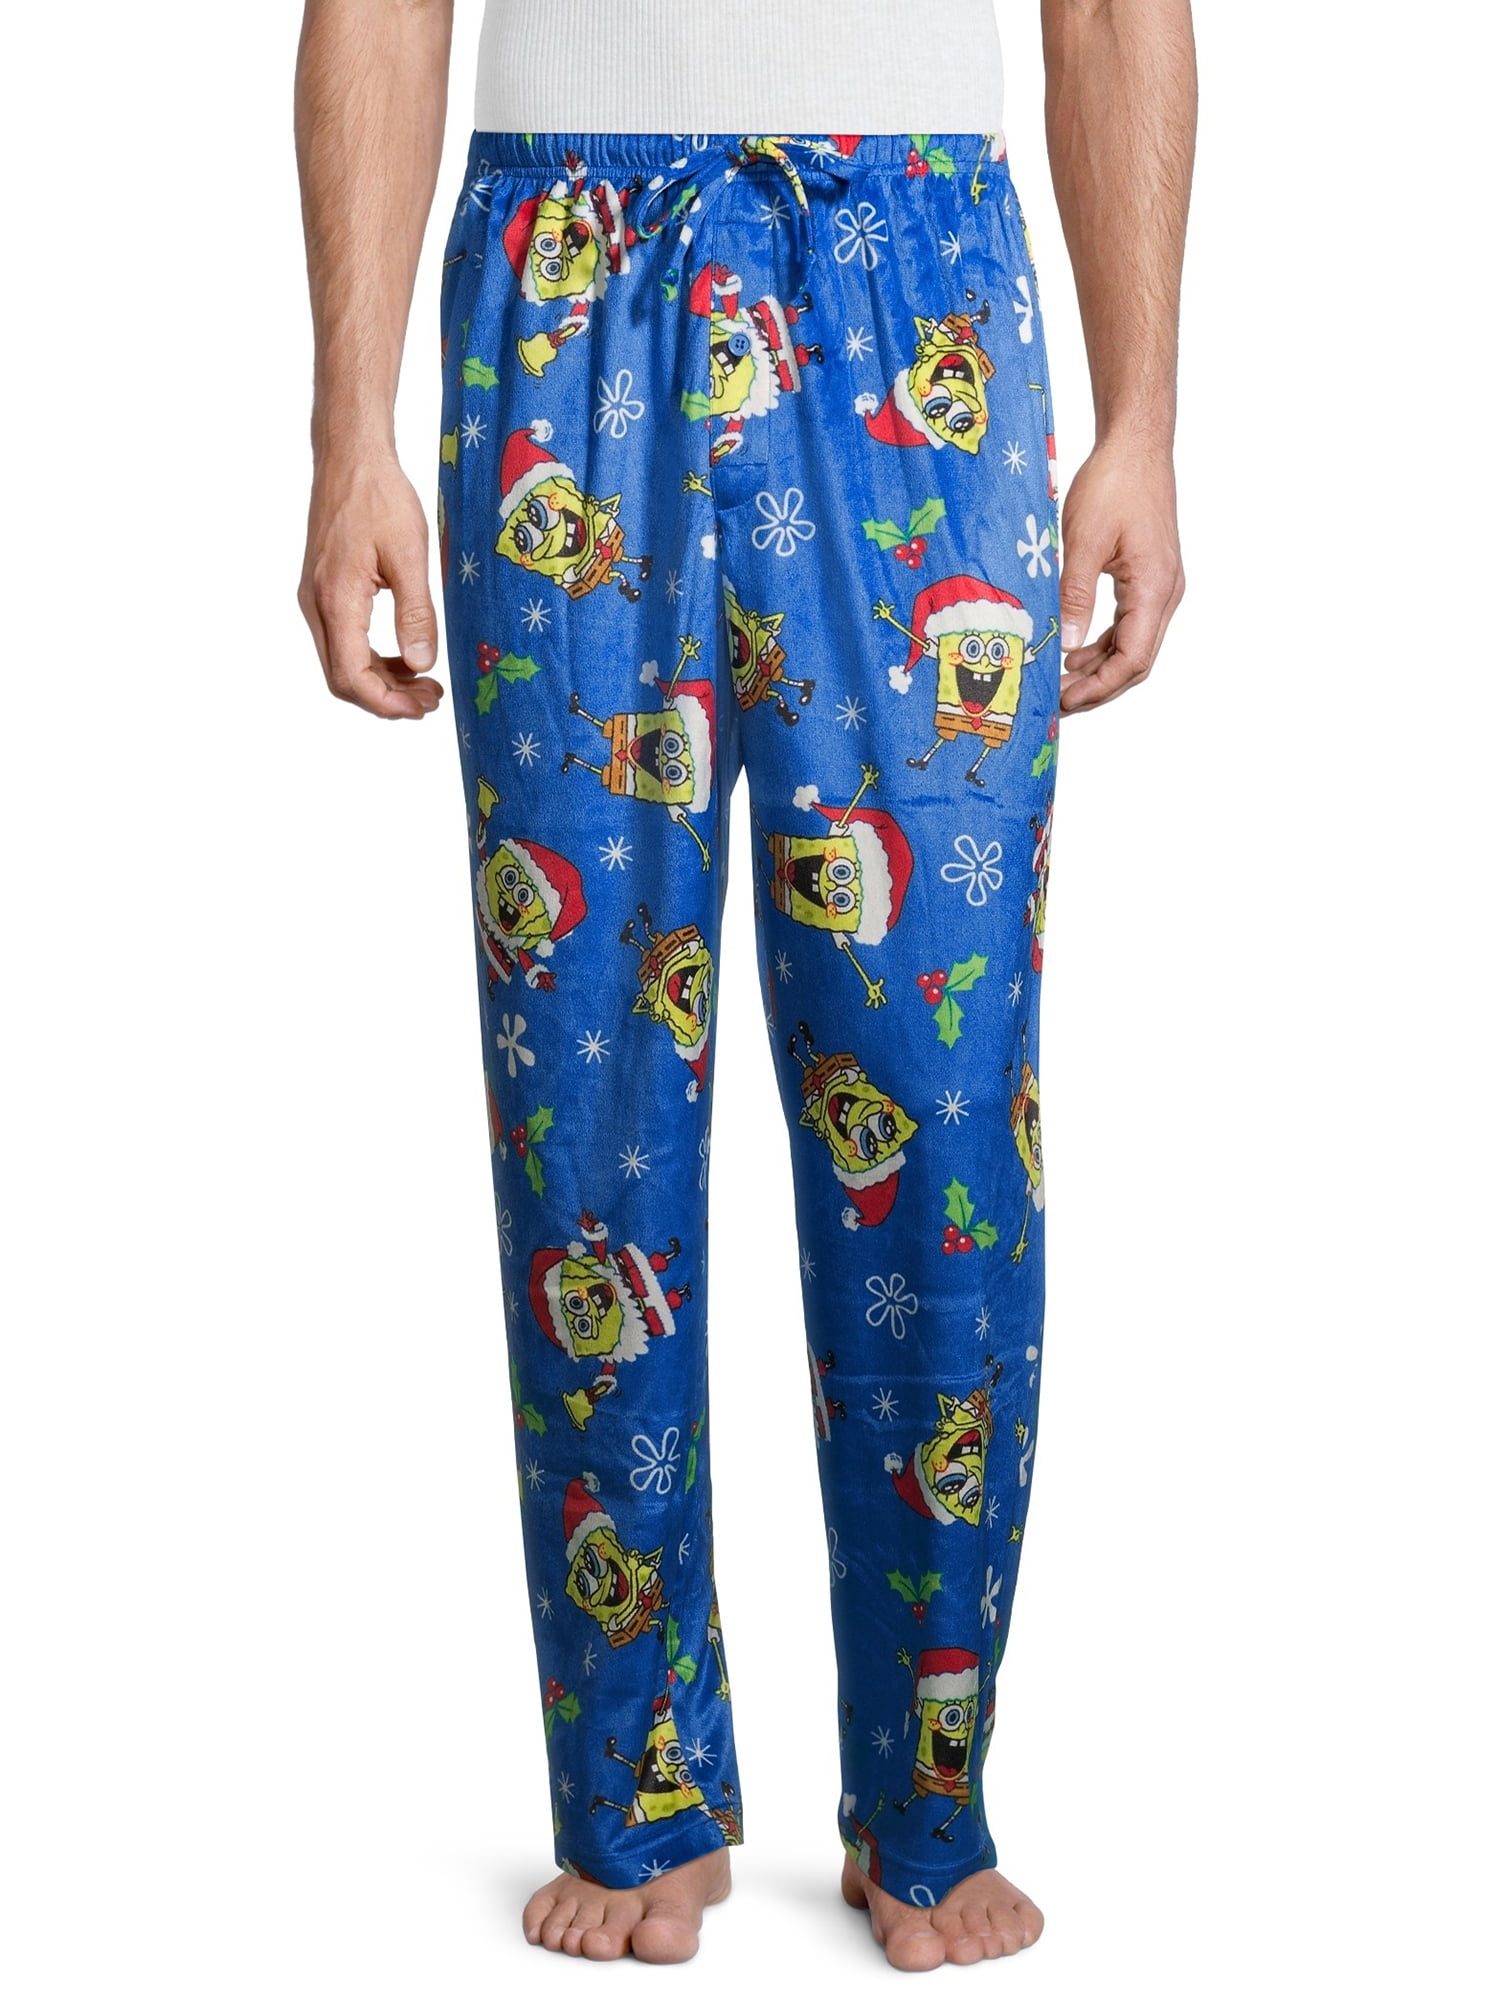 SpongeBob SquarePants Men's Christmas Pajama Pants - Walmart.com